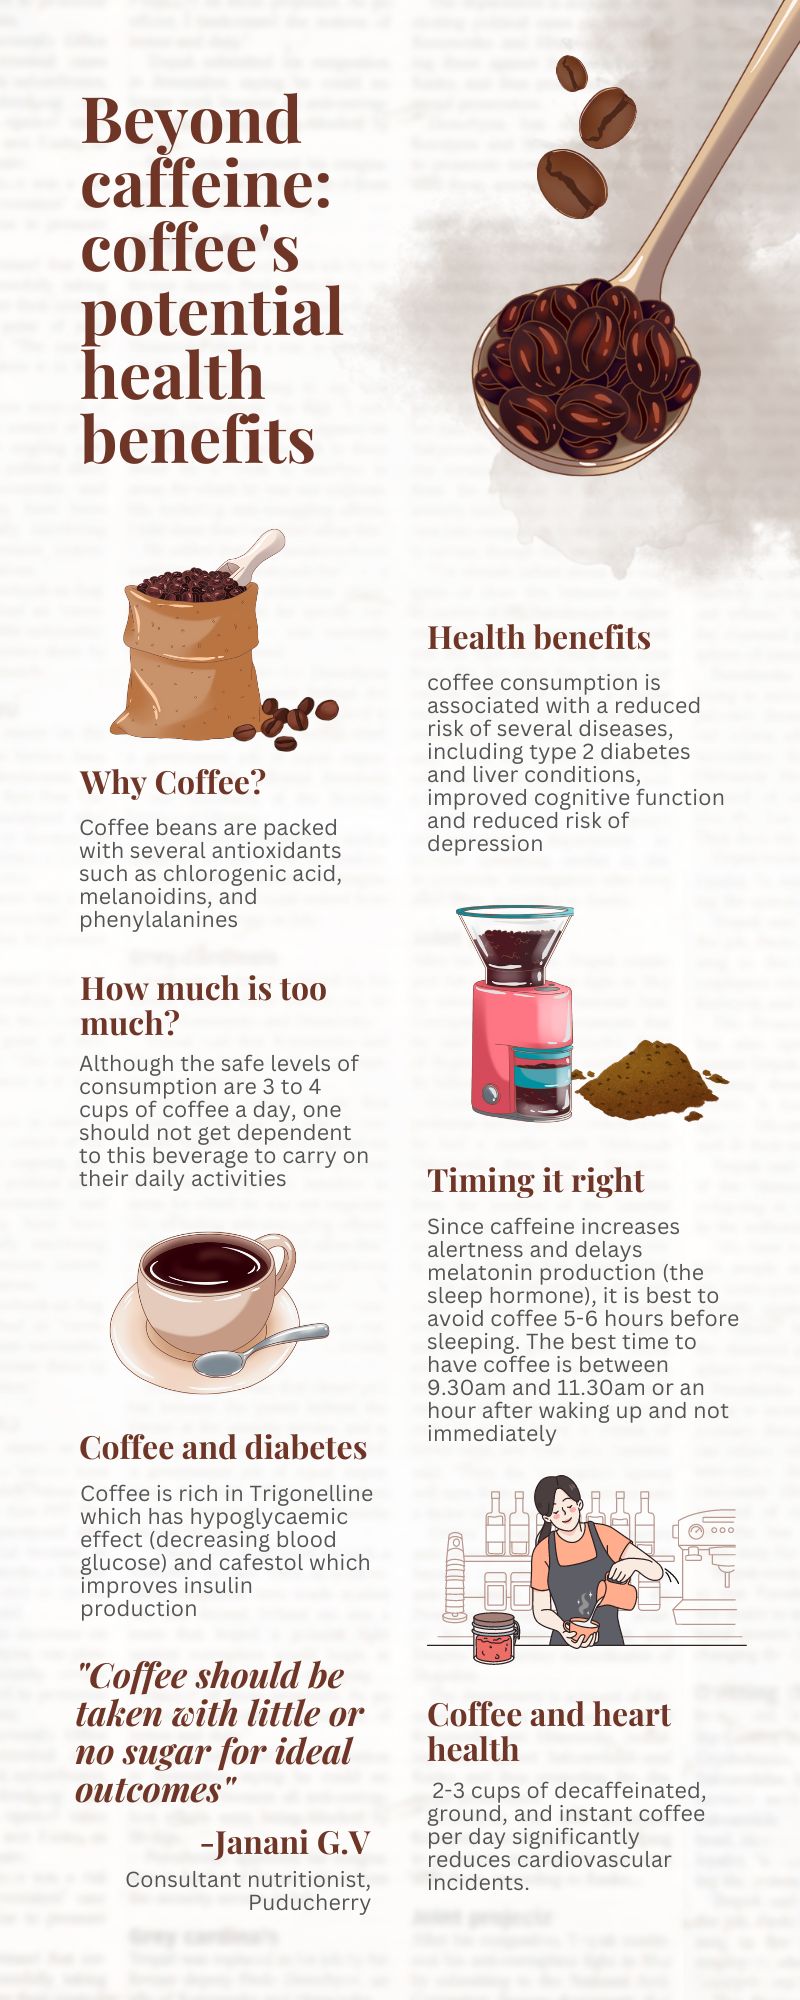 coffee, food and nutrition, antioxidants, diet, diabetes, heart disease, caffeine